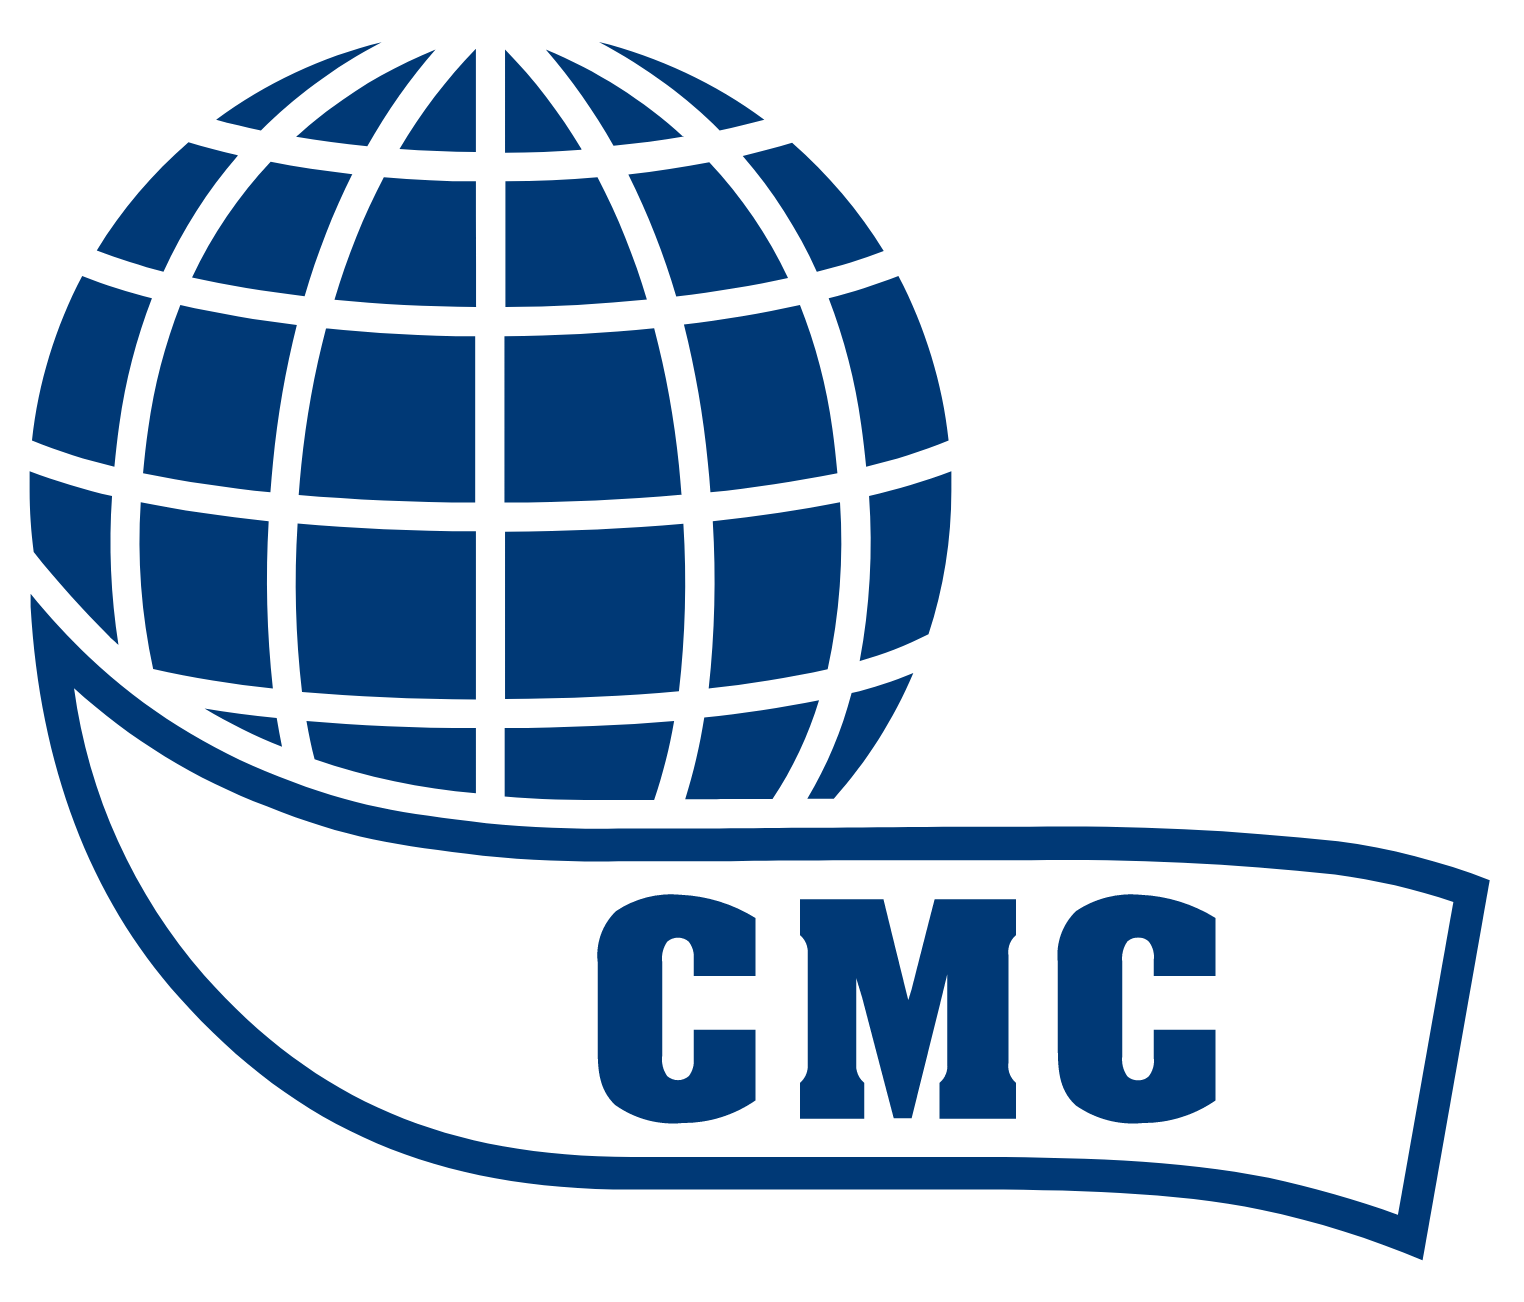 CMC Logo PNG Transparent & SVG Vector - Freebie Supply